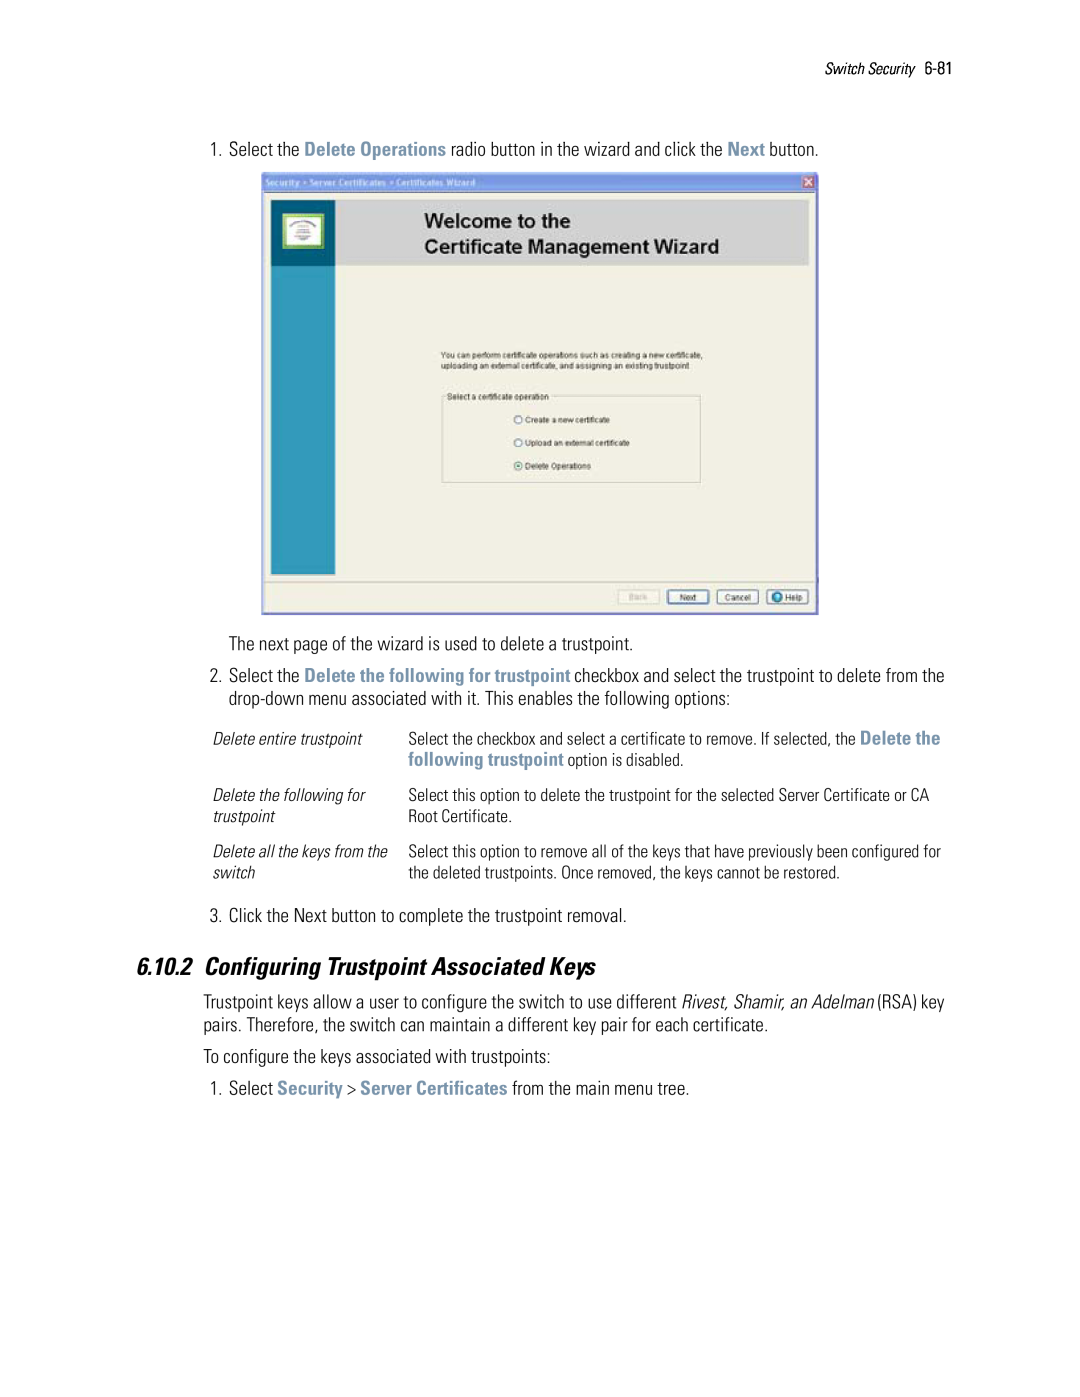 Motorola WS5100 manual 6.10.2Configuring Trustpoint Associated Keys 